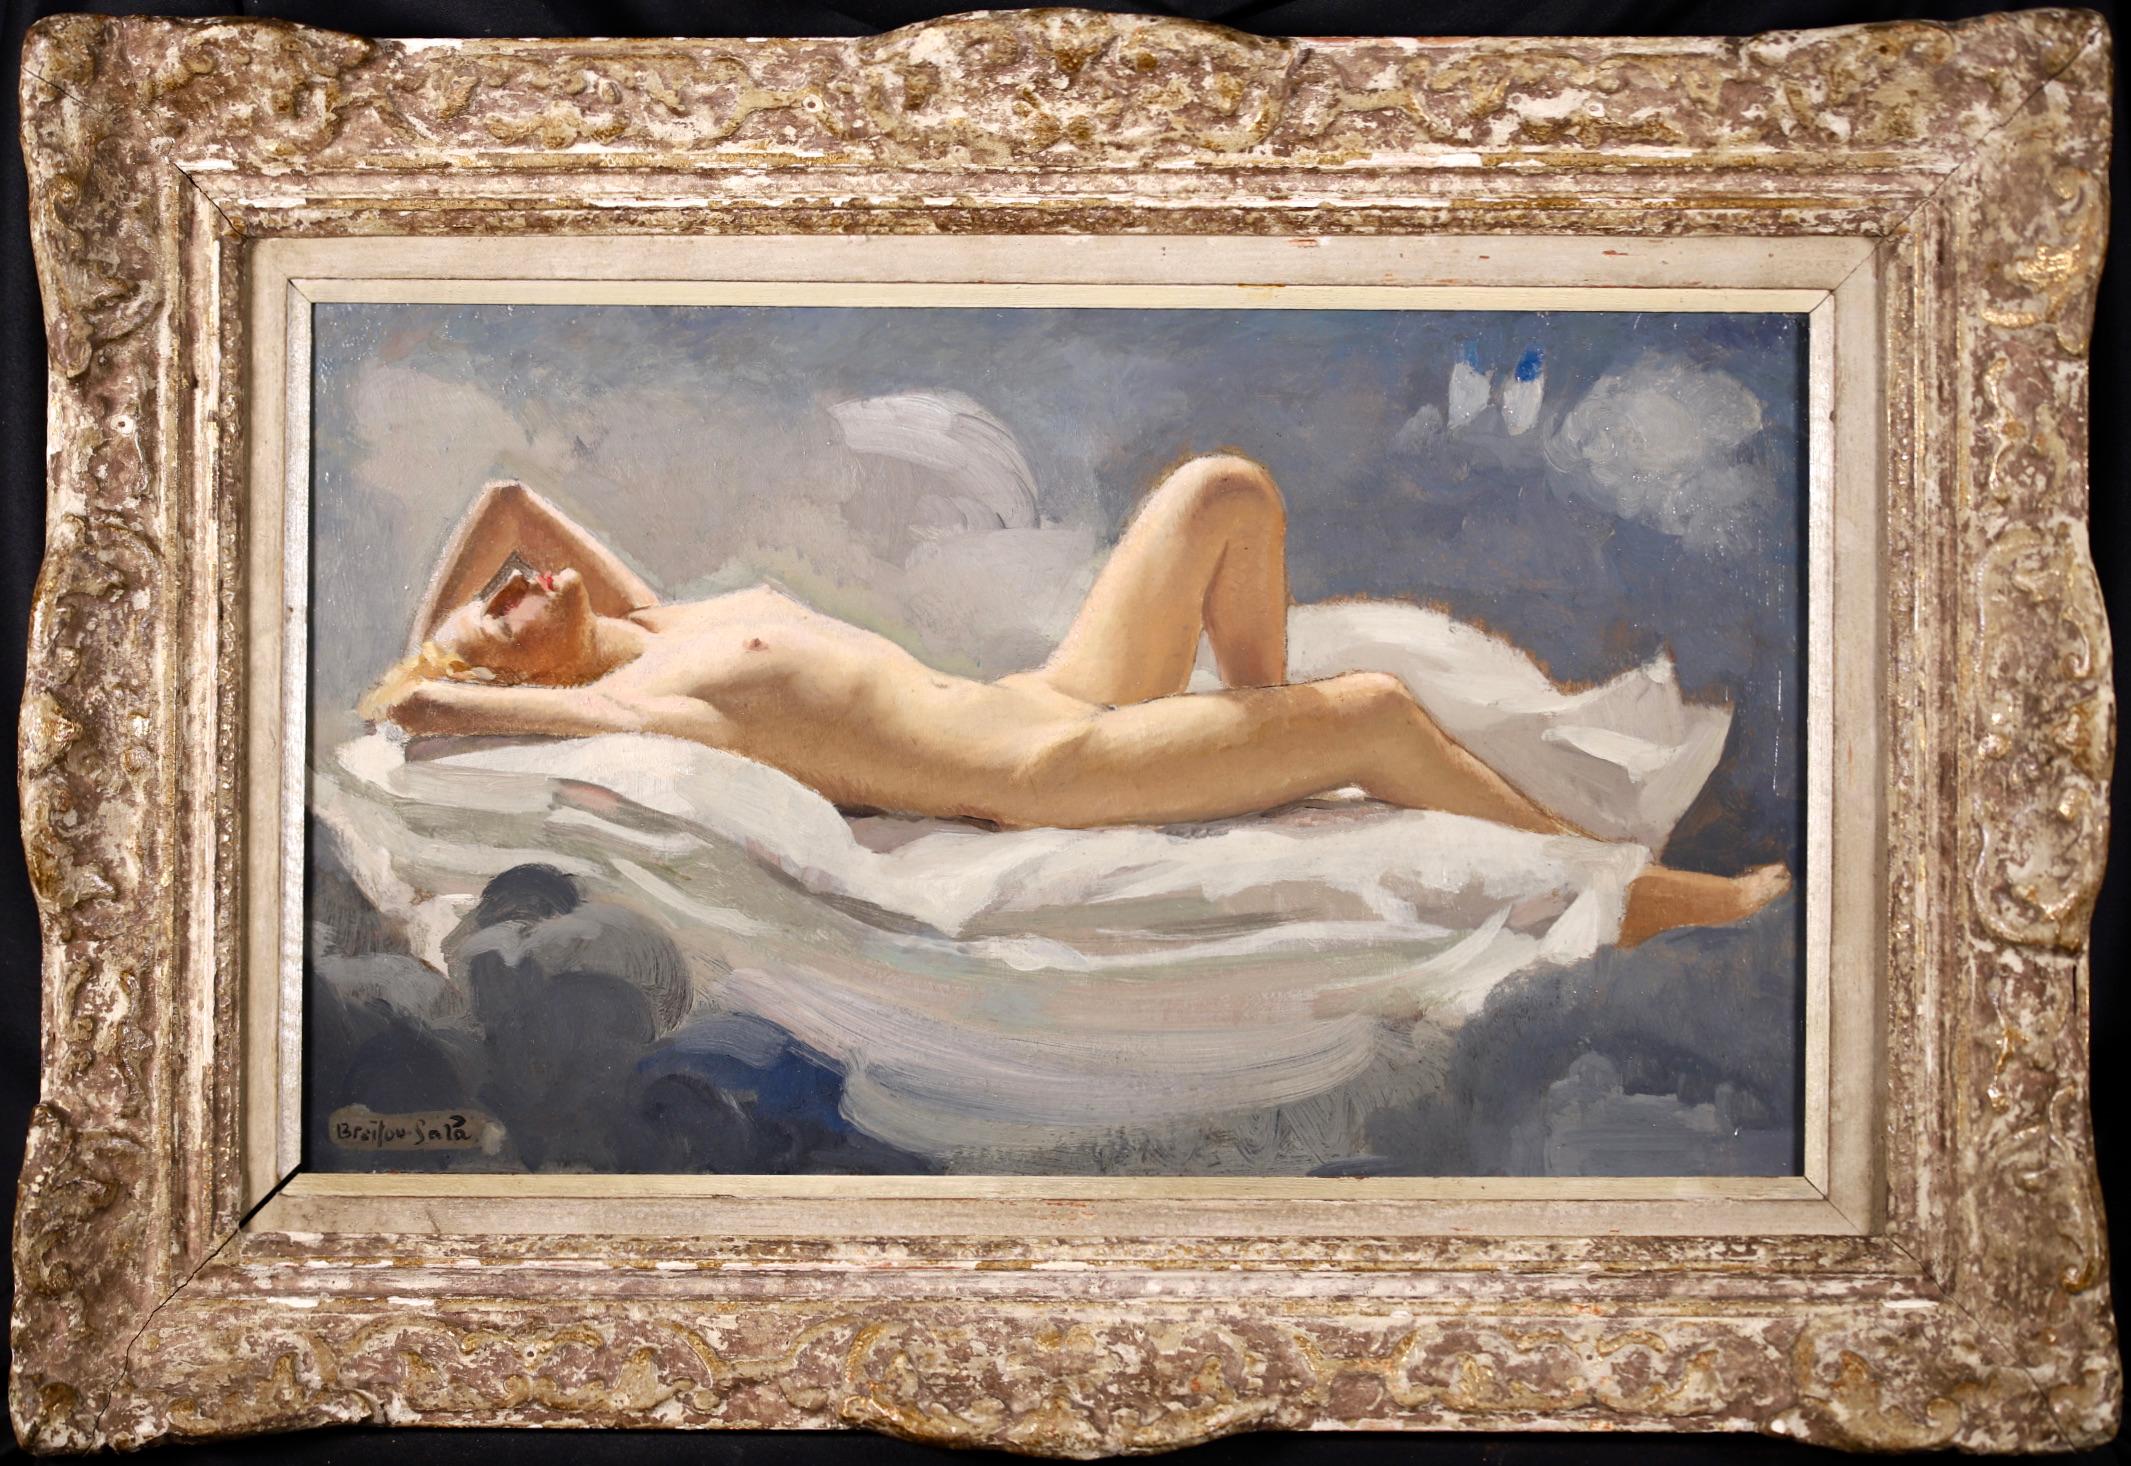 Nude in the Clouds - Post Impressionist Figurative Oil by Albert Braïtou-Sala